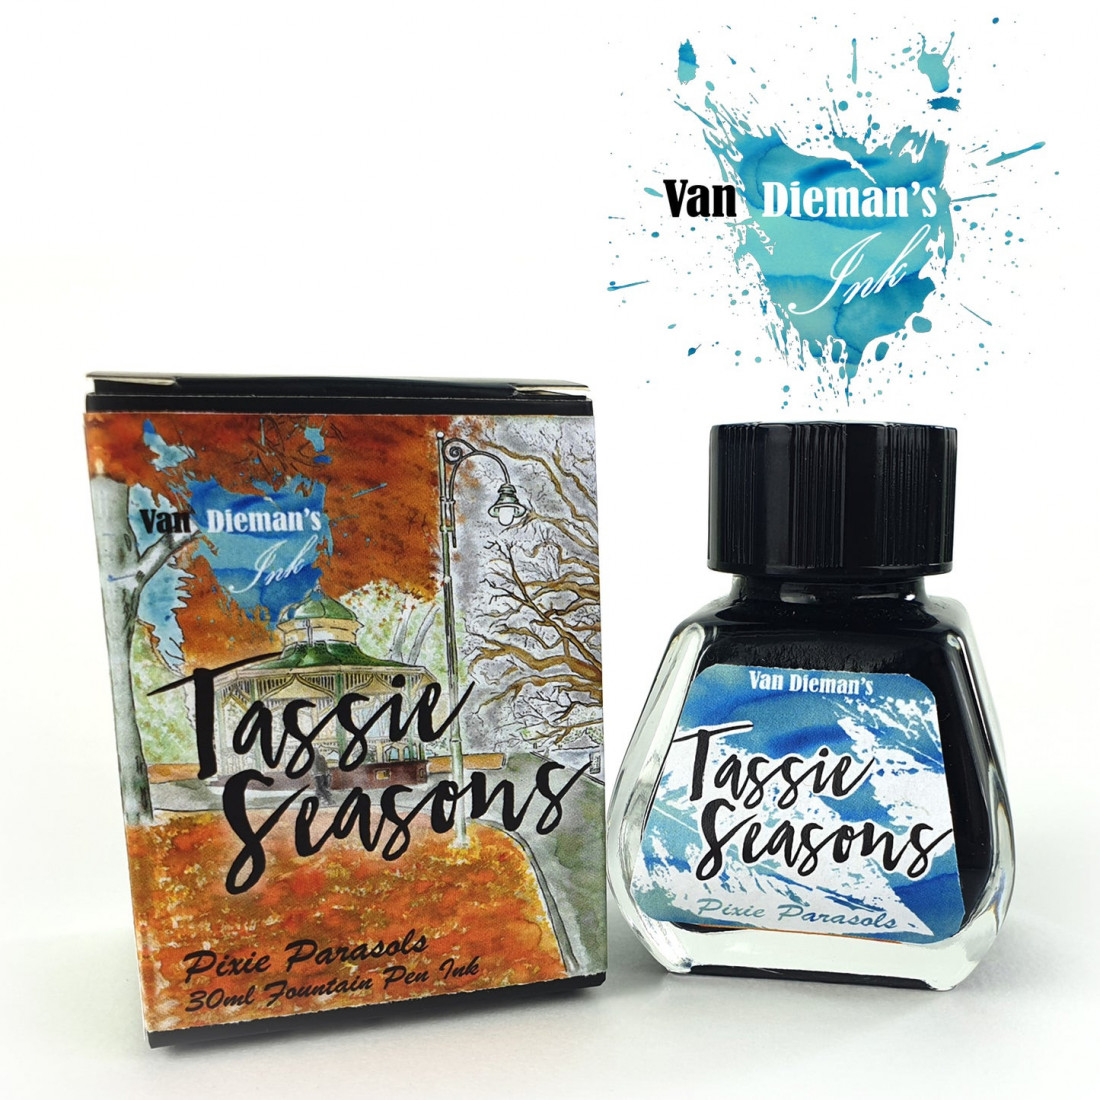 Van Diemans Tassie Seasons (Autumn) Pixie Parasols - Fountain Pen Ink